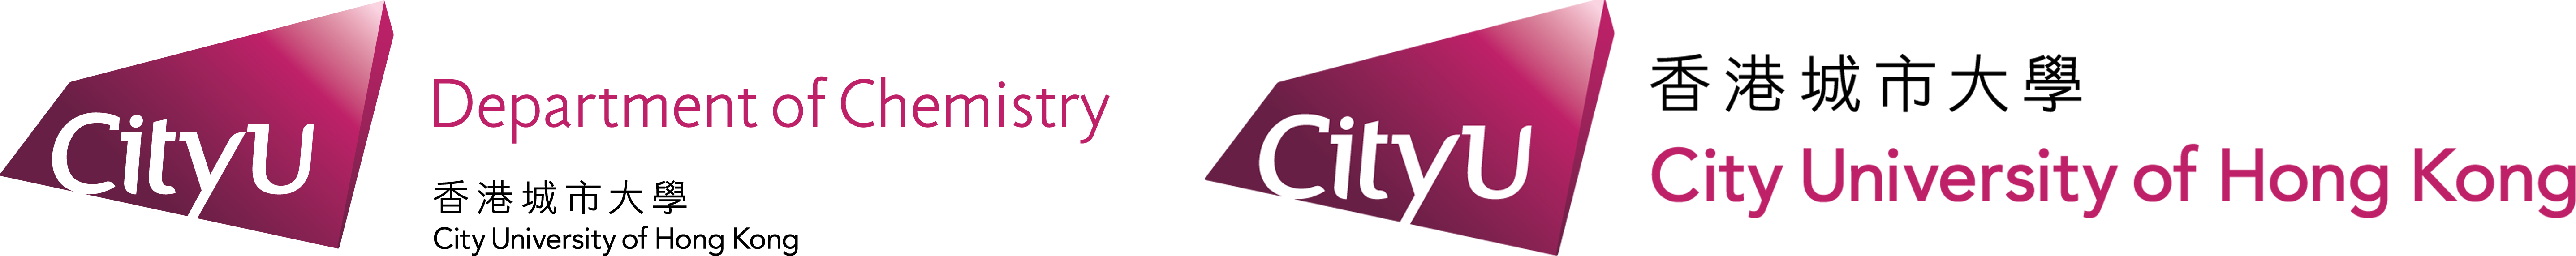 CityU logos